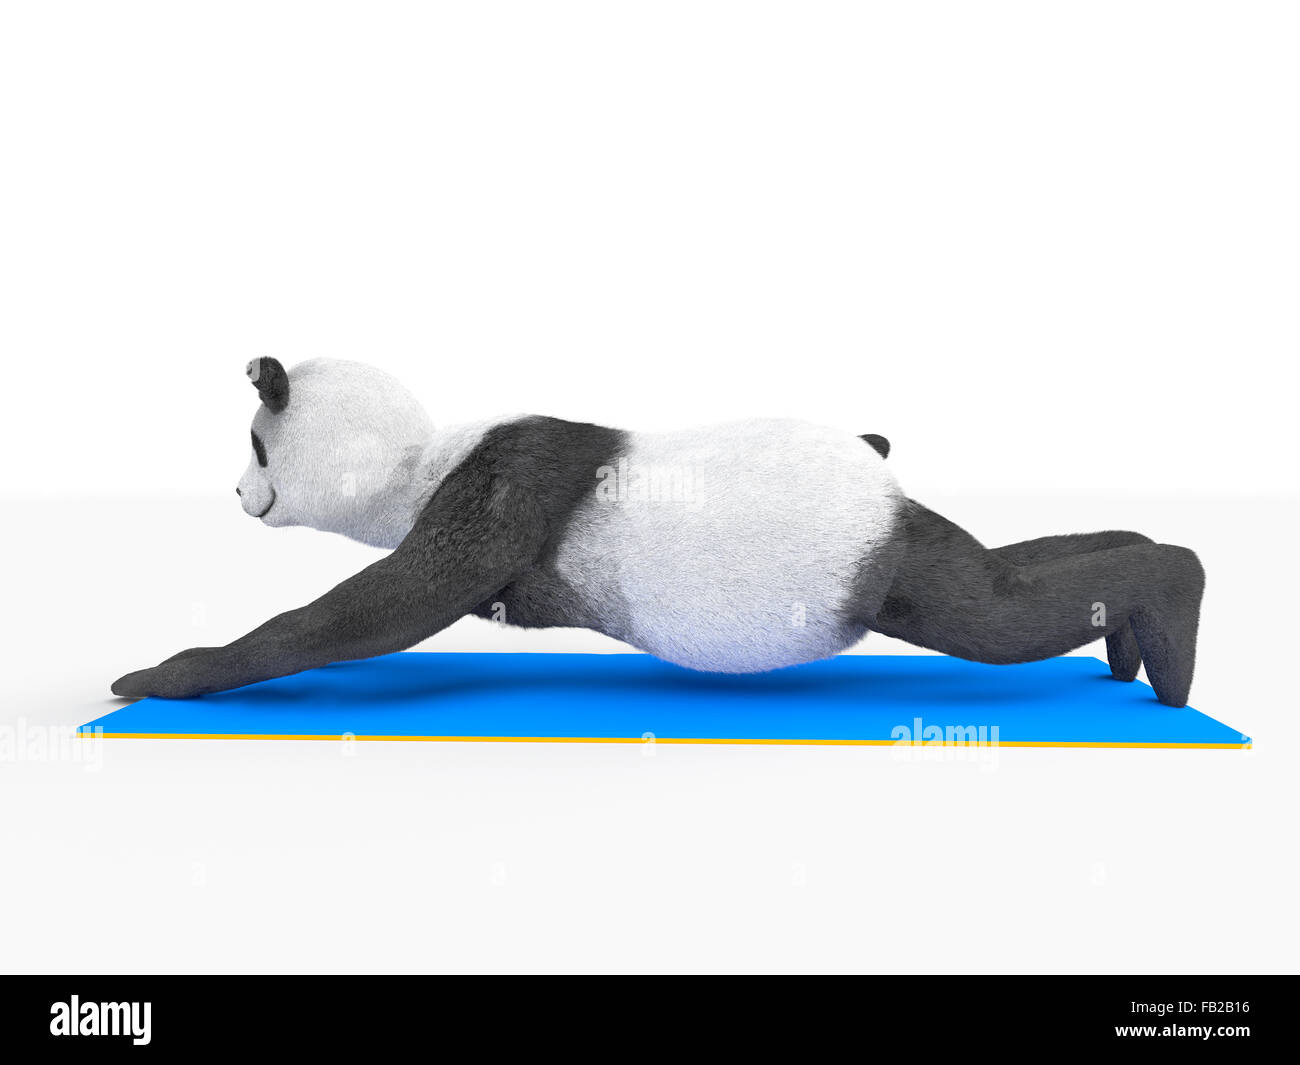 push-ups by animal character athlete illustration Stock Photo